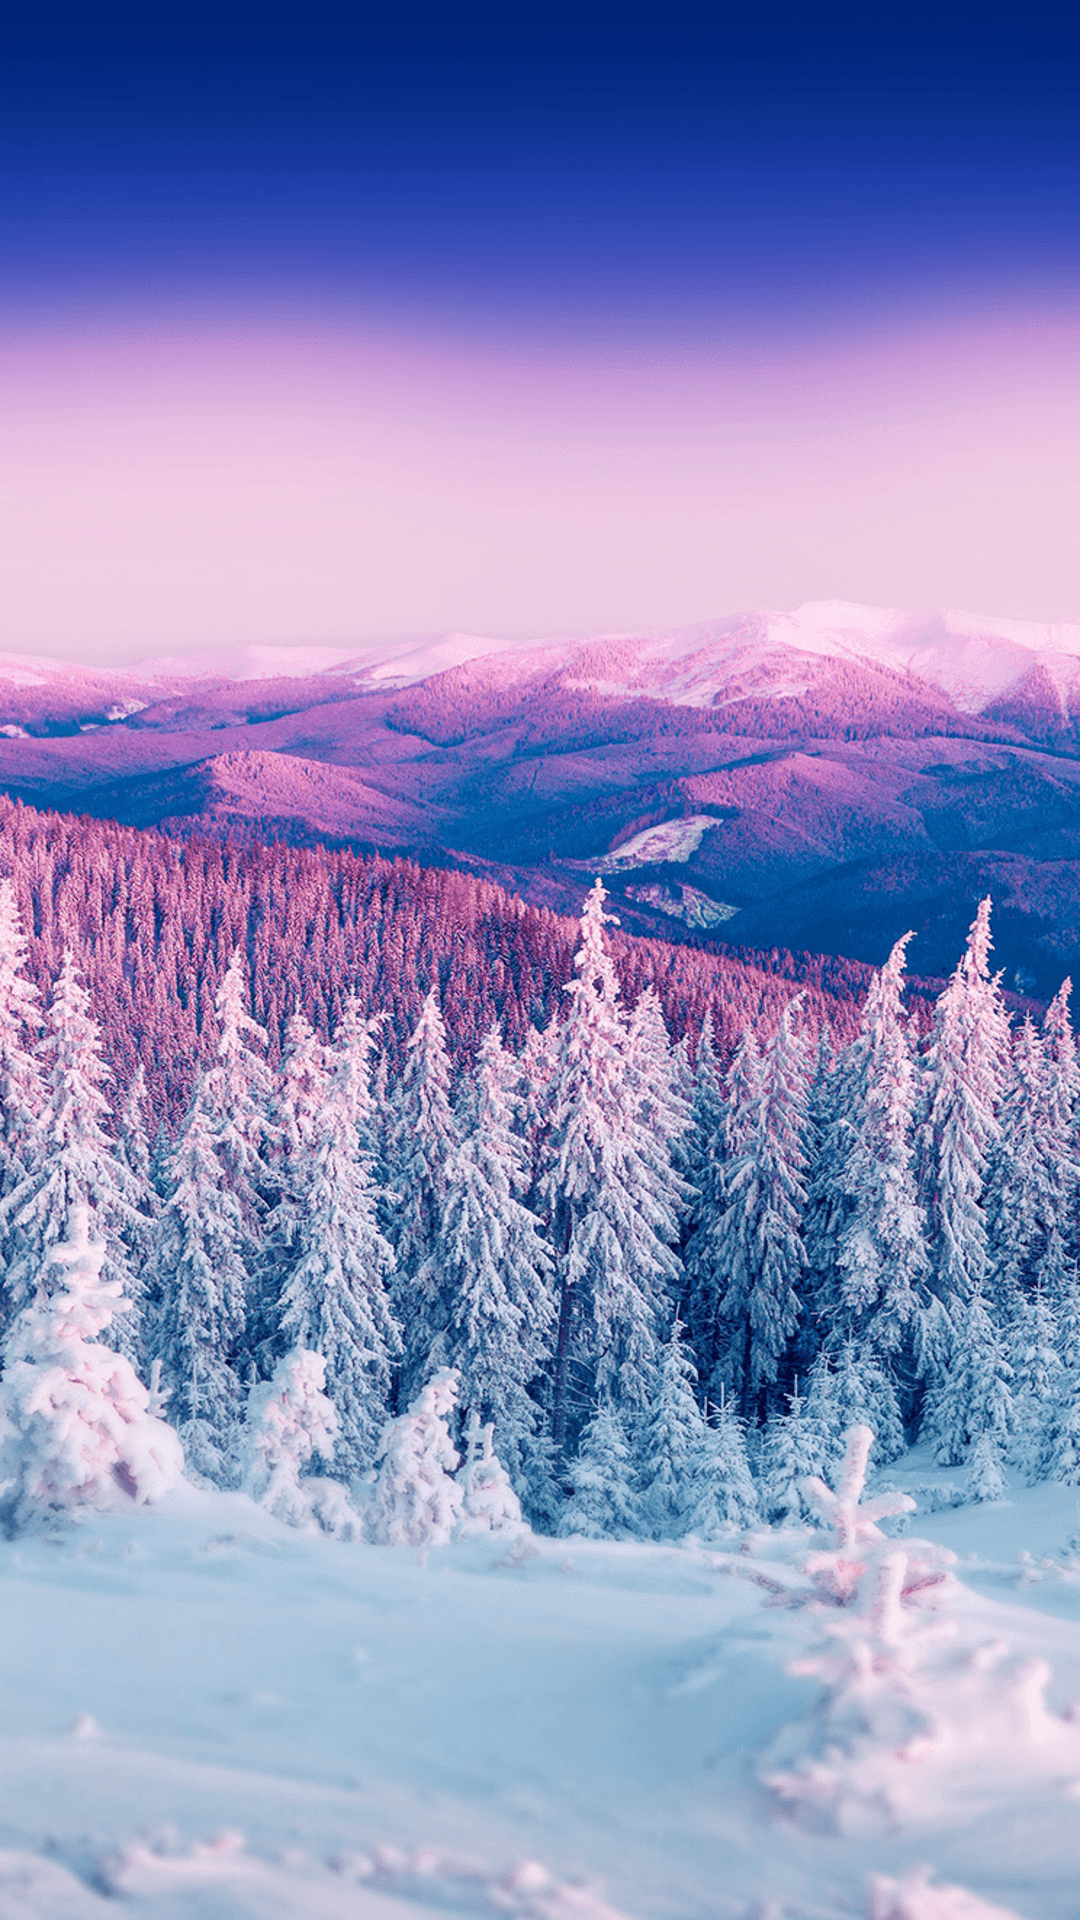  Schnee Hintergrundbild 1080x1920. winter wallpaper:Amazon.de:Appstore for Android